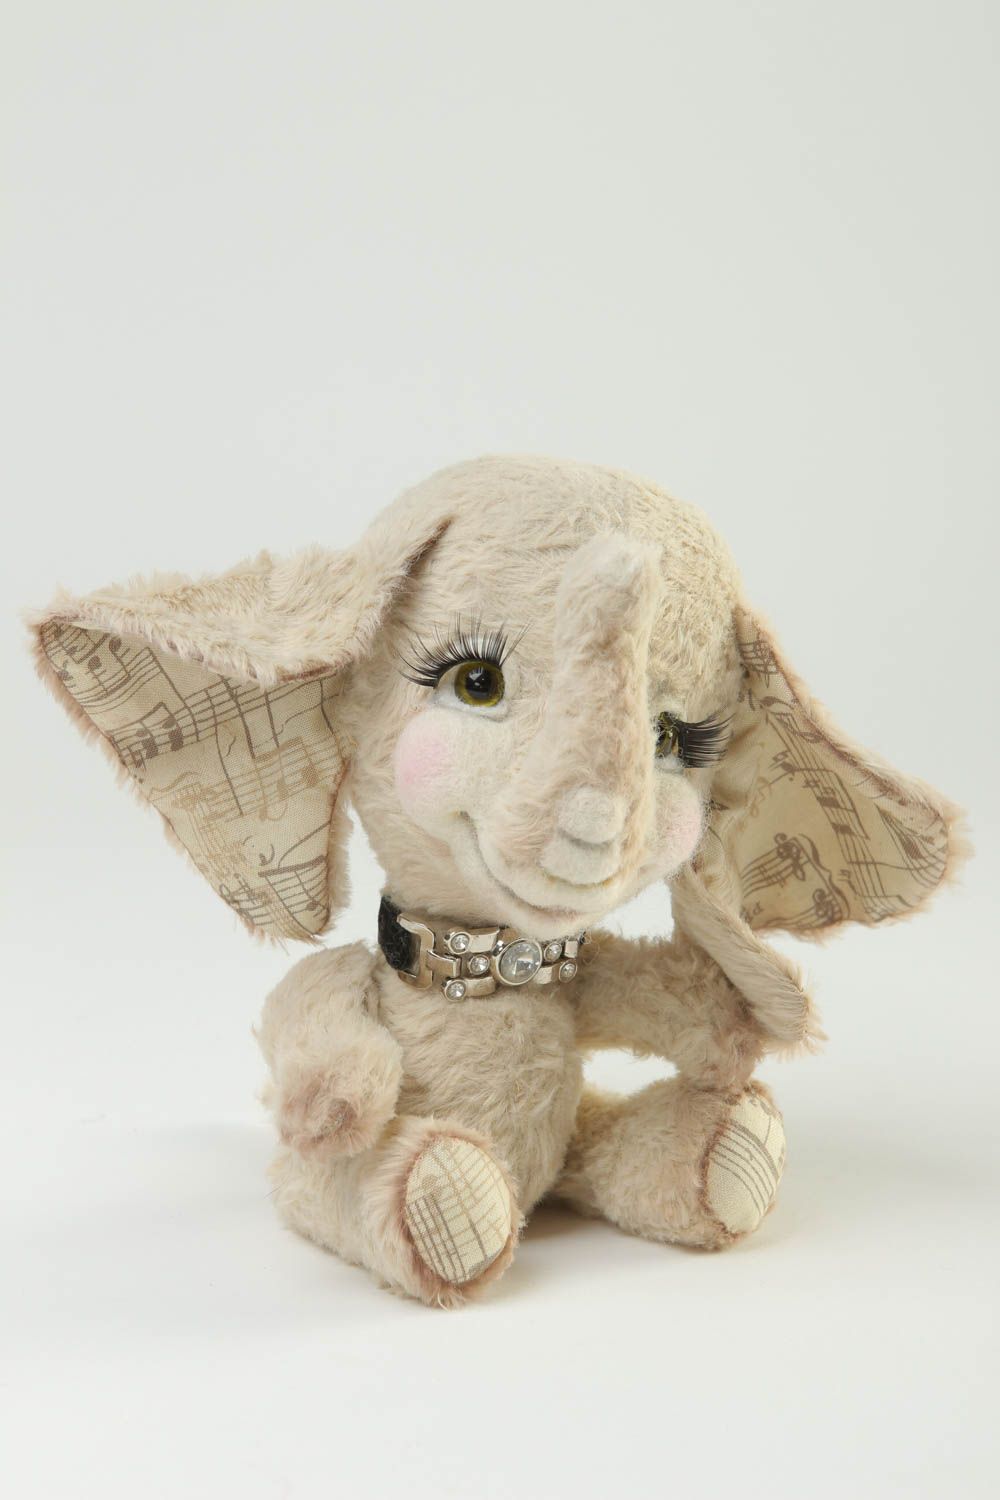 Handmade toy soft animal toy designer toy for baby nursery decor gift ideas photo 2